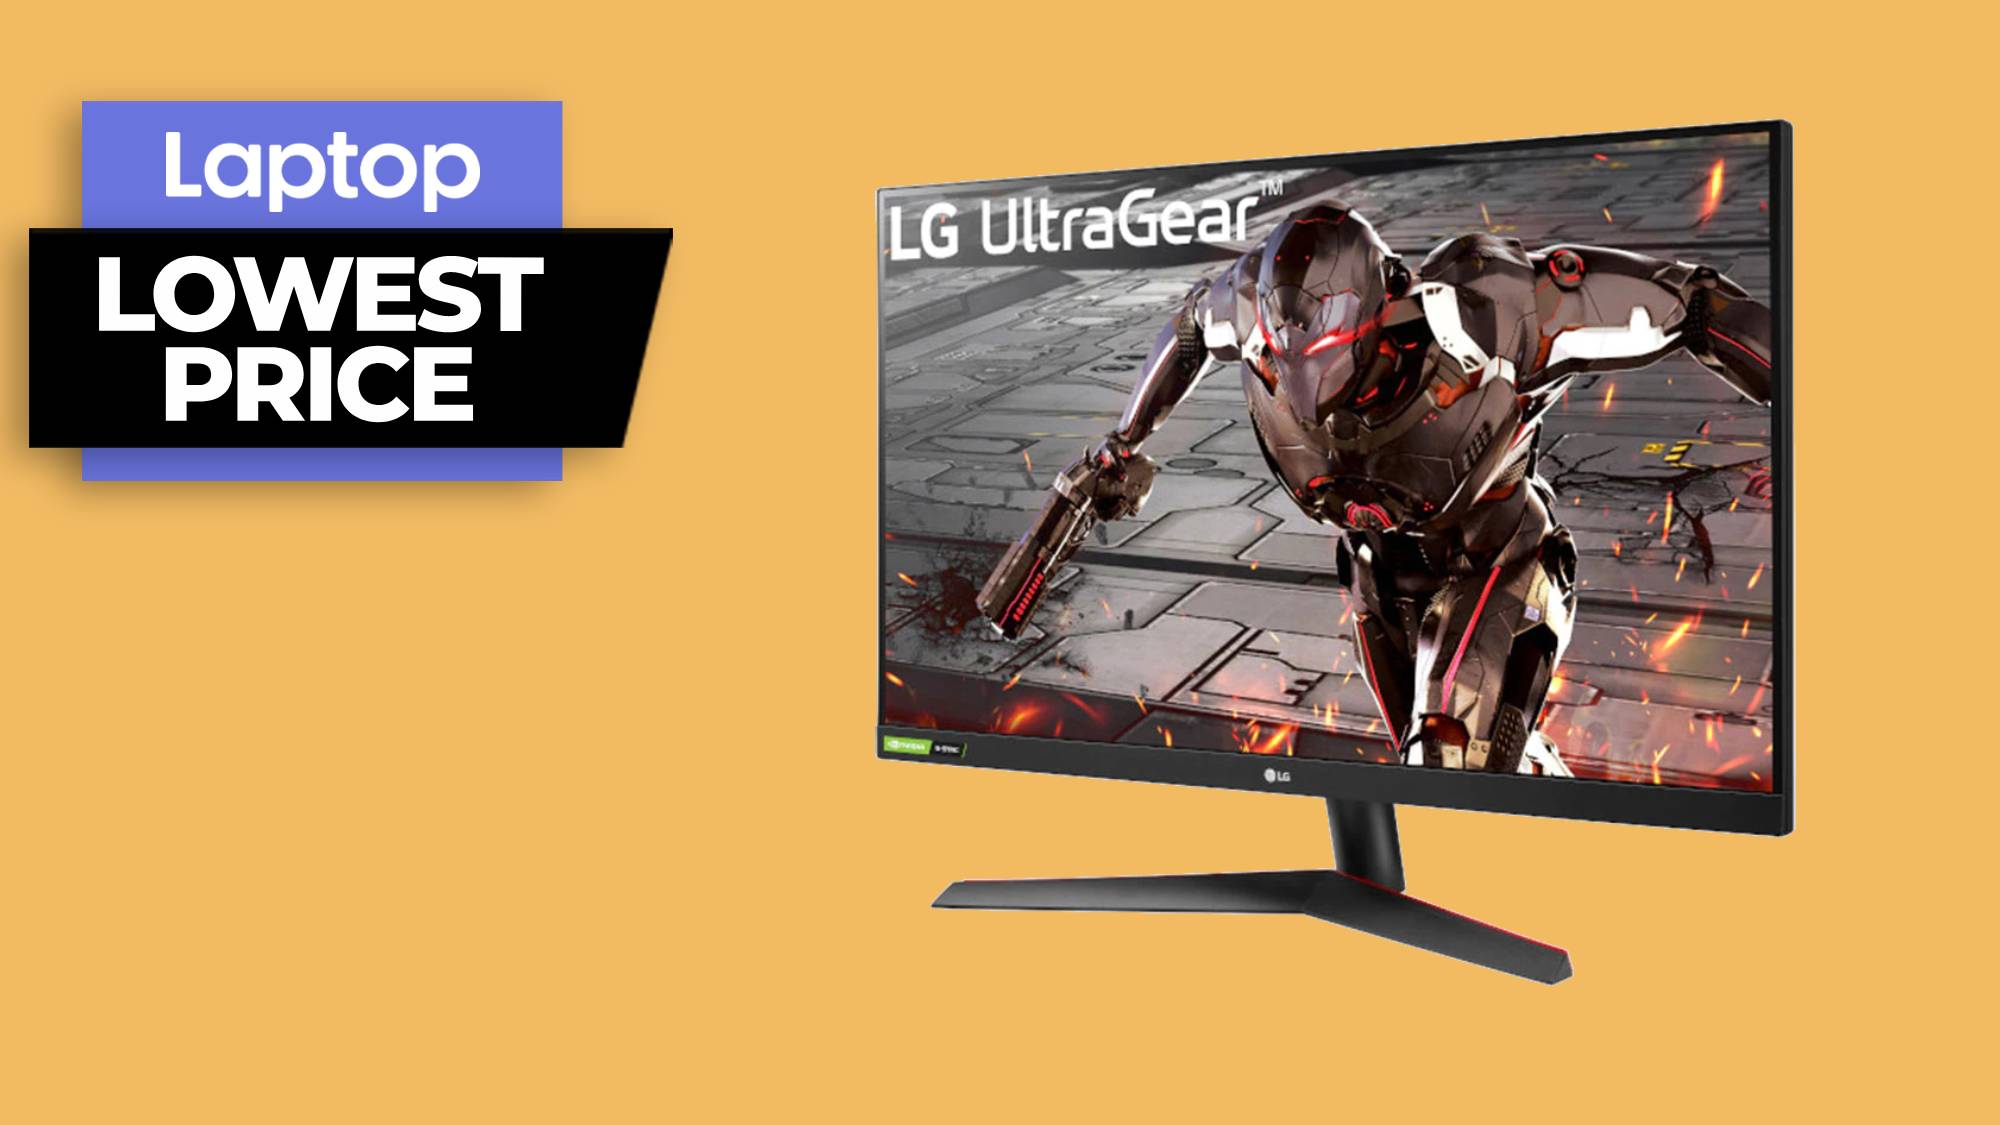 LG UltraGear gaming monitor lowest price